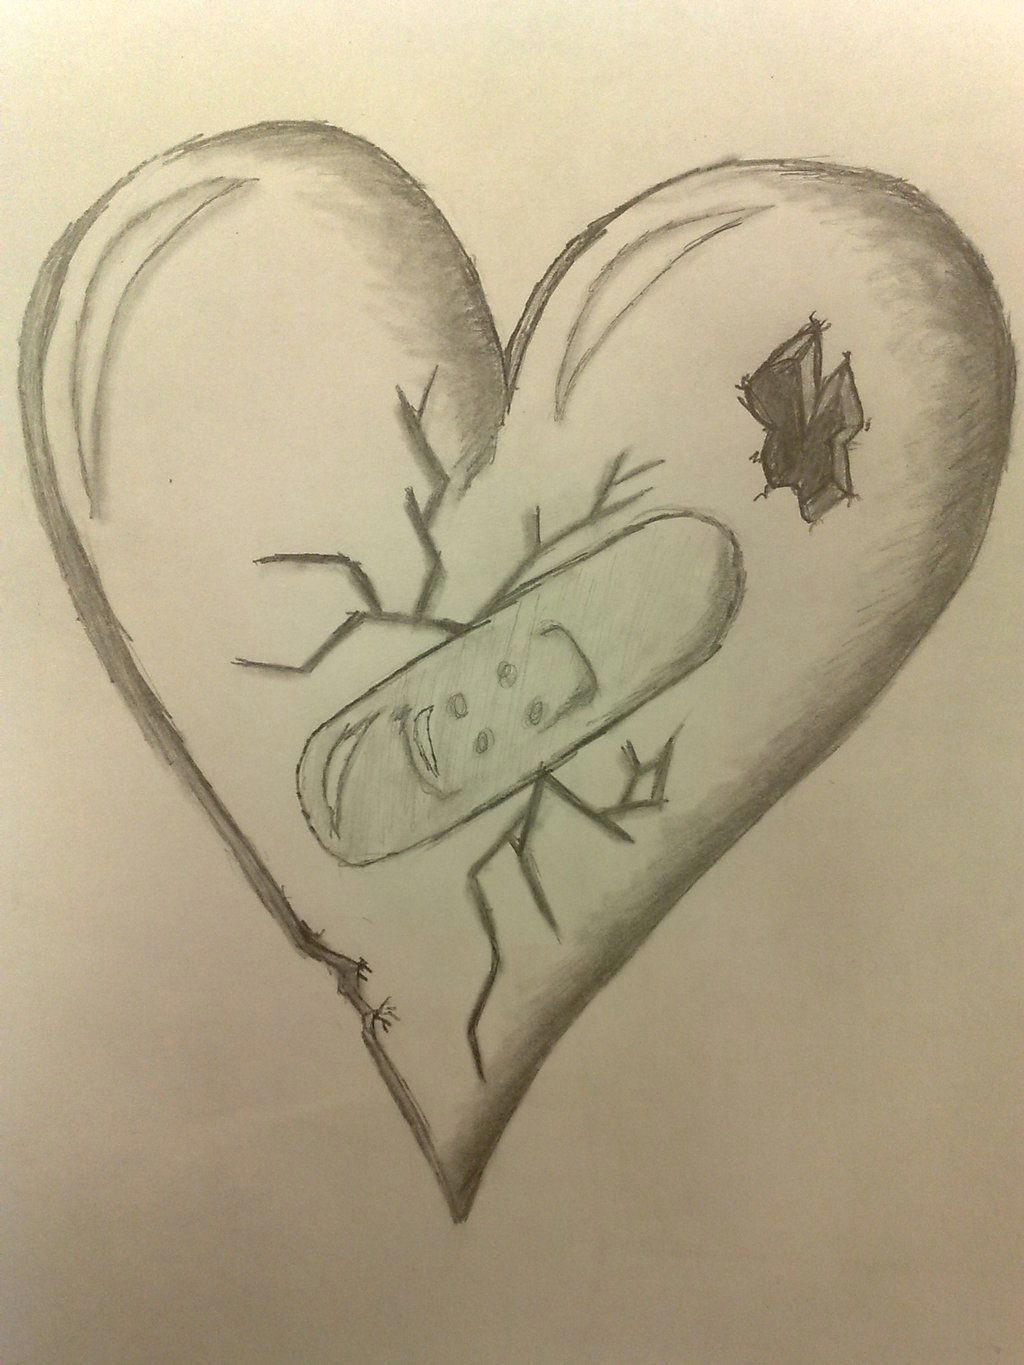 pretty broken hearts drawings free download cool b broken hearts drawings broken heart b healing